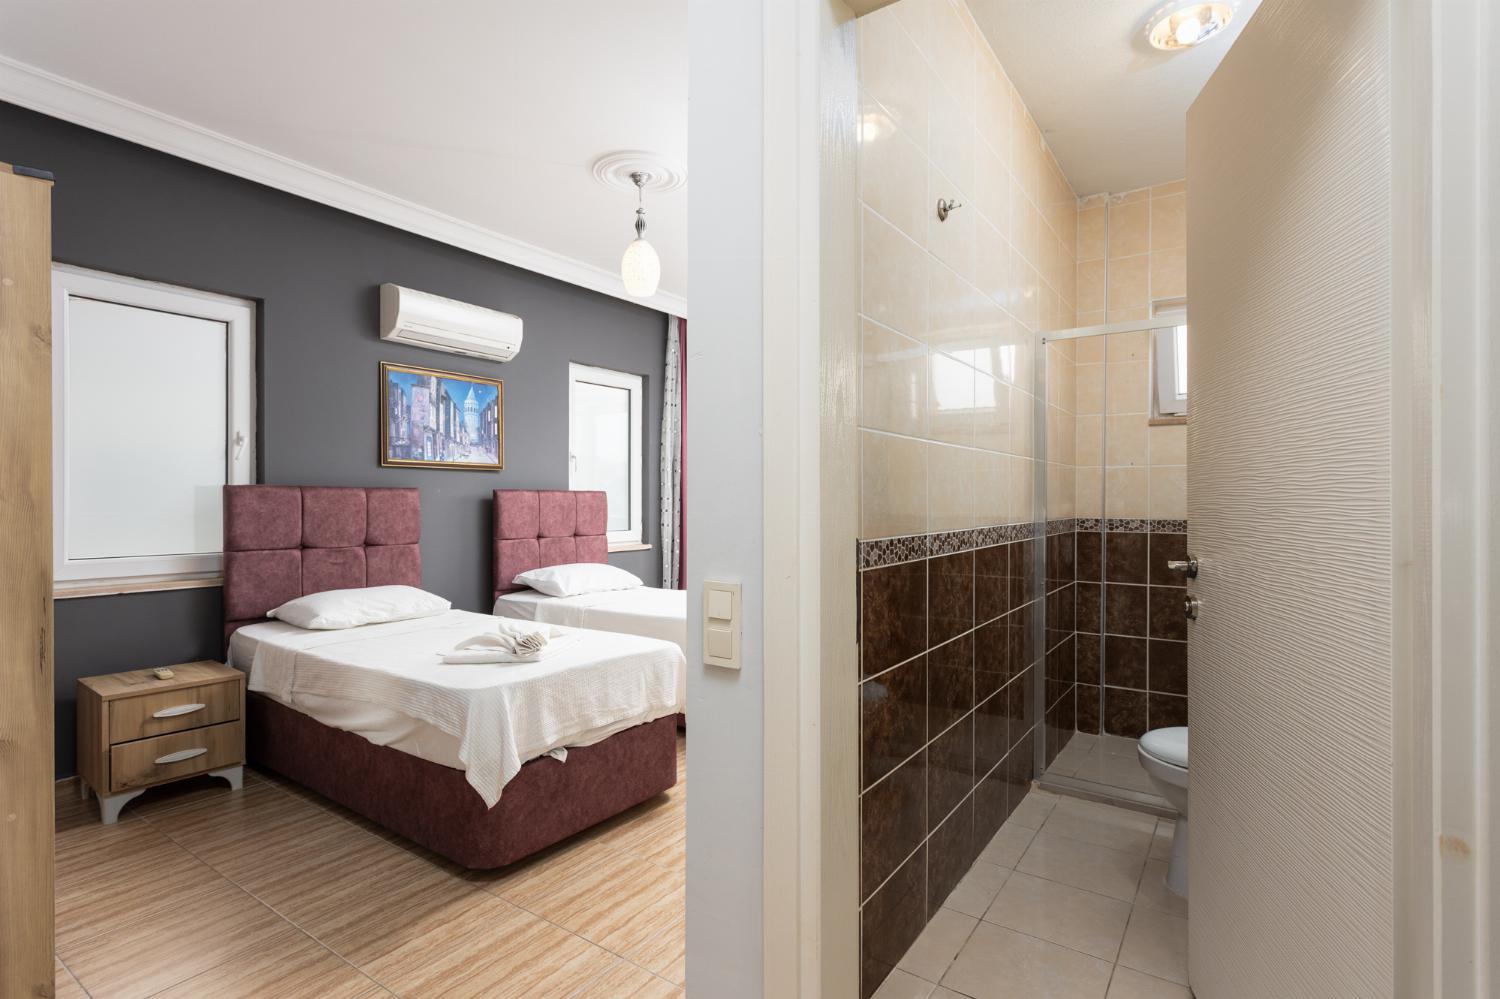 Twin bedroom with en suite bathroom and A/C